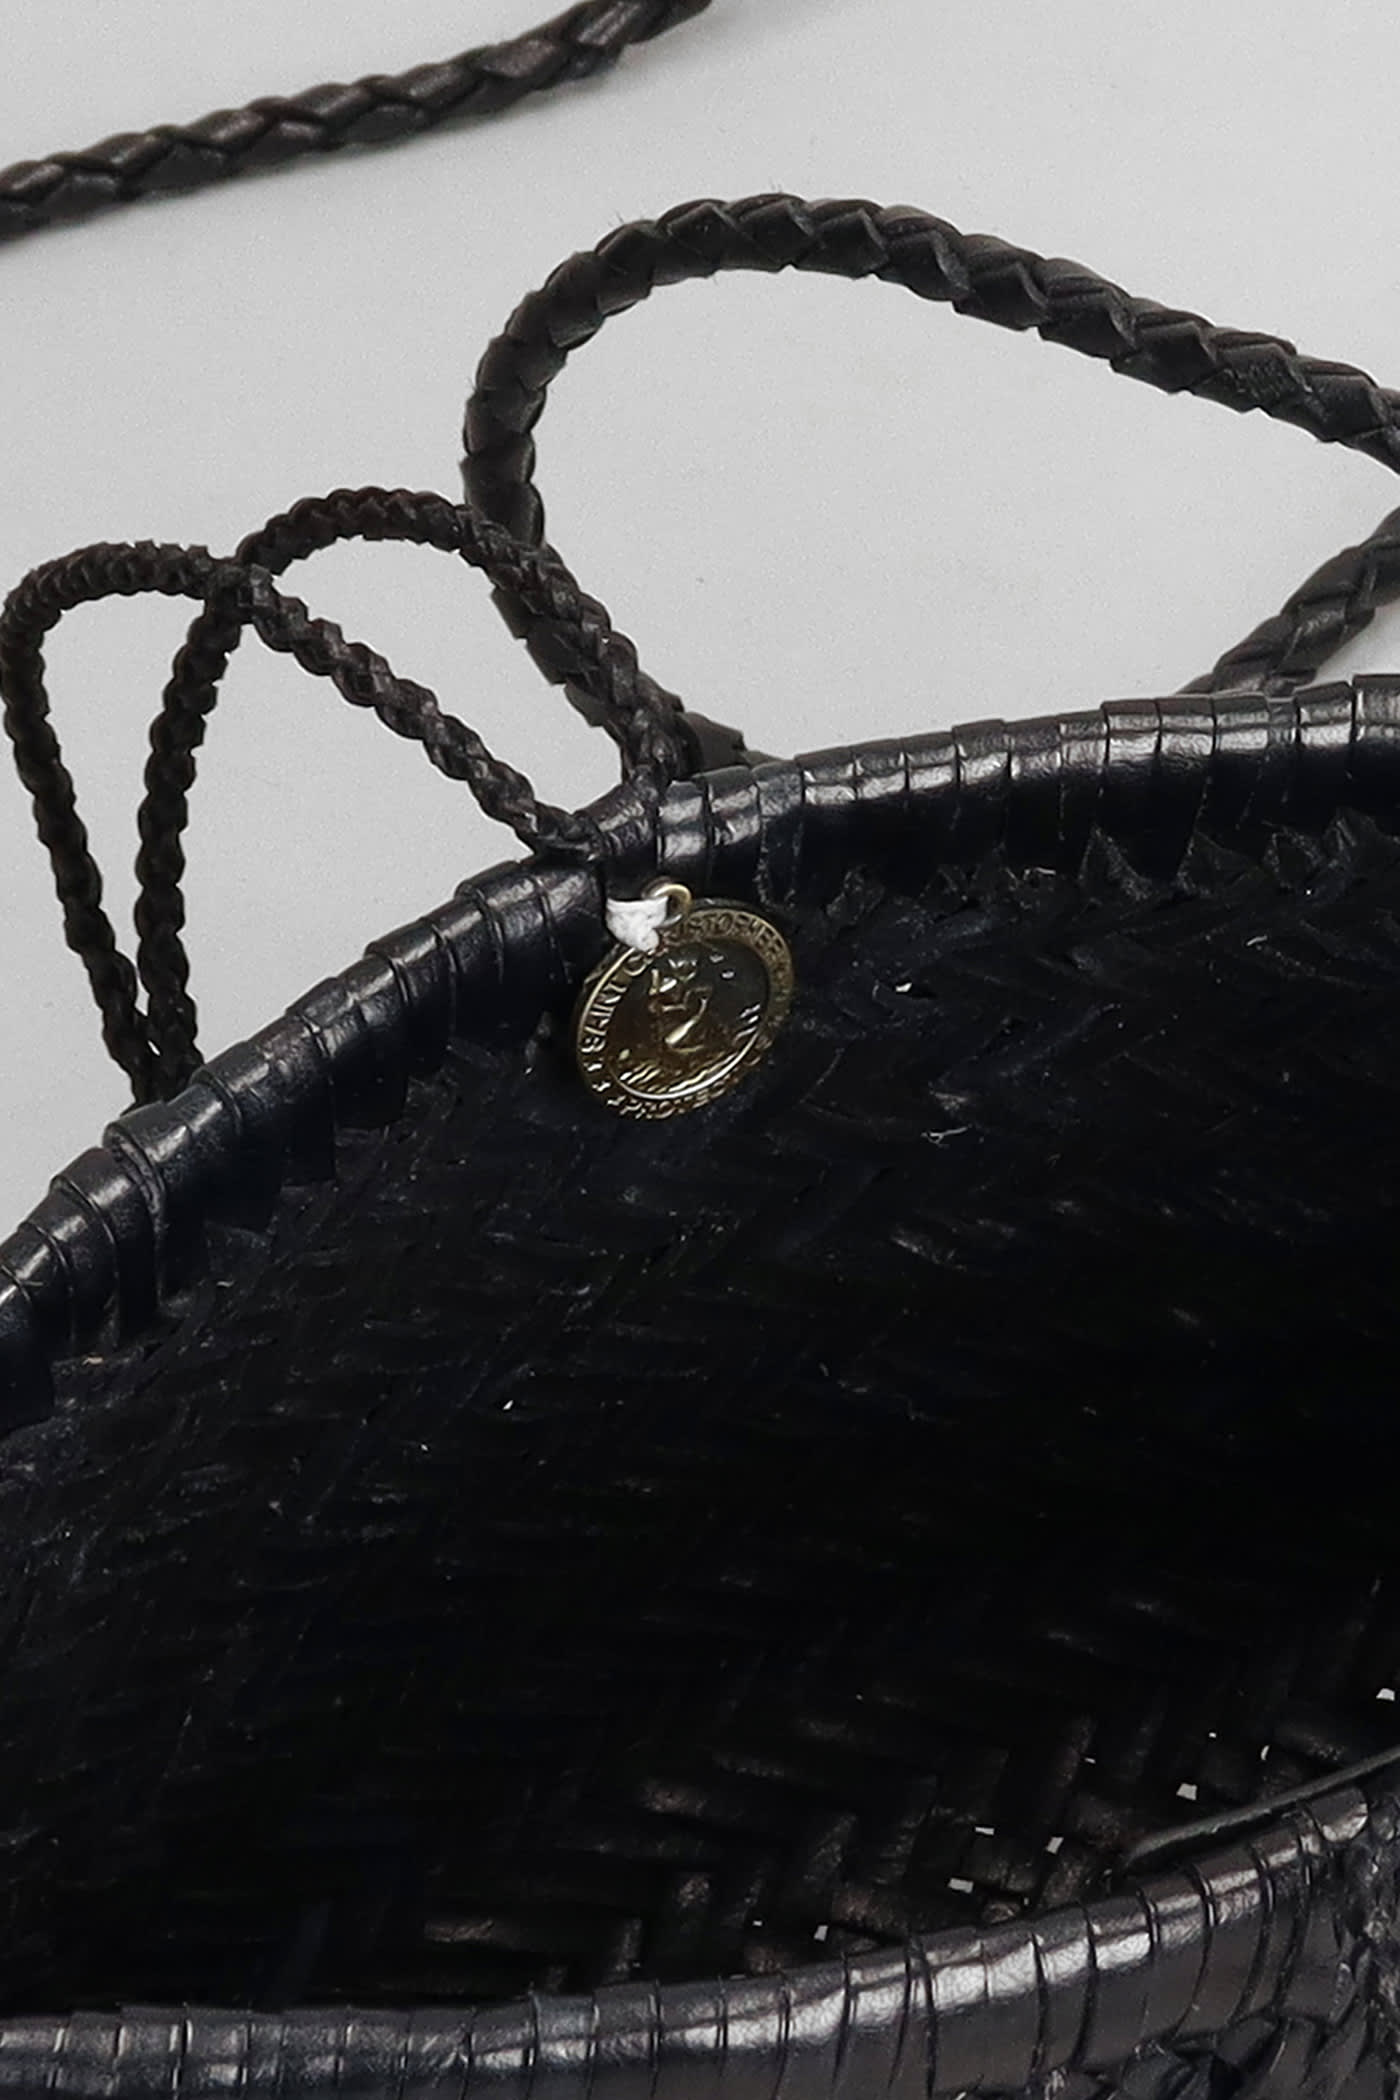 Shop Dragon Diffusion Minsu Shoulder Bag In Black Leather